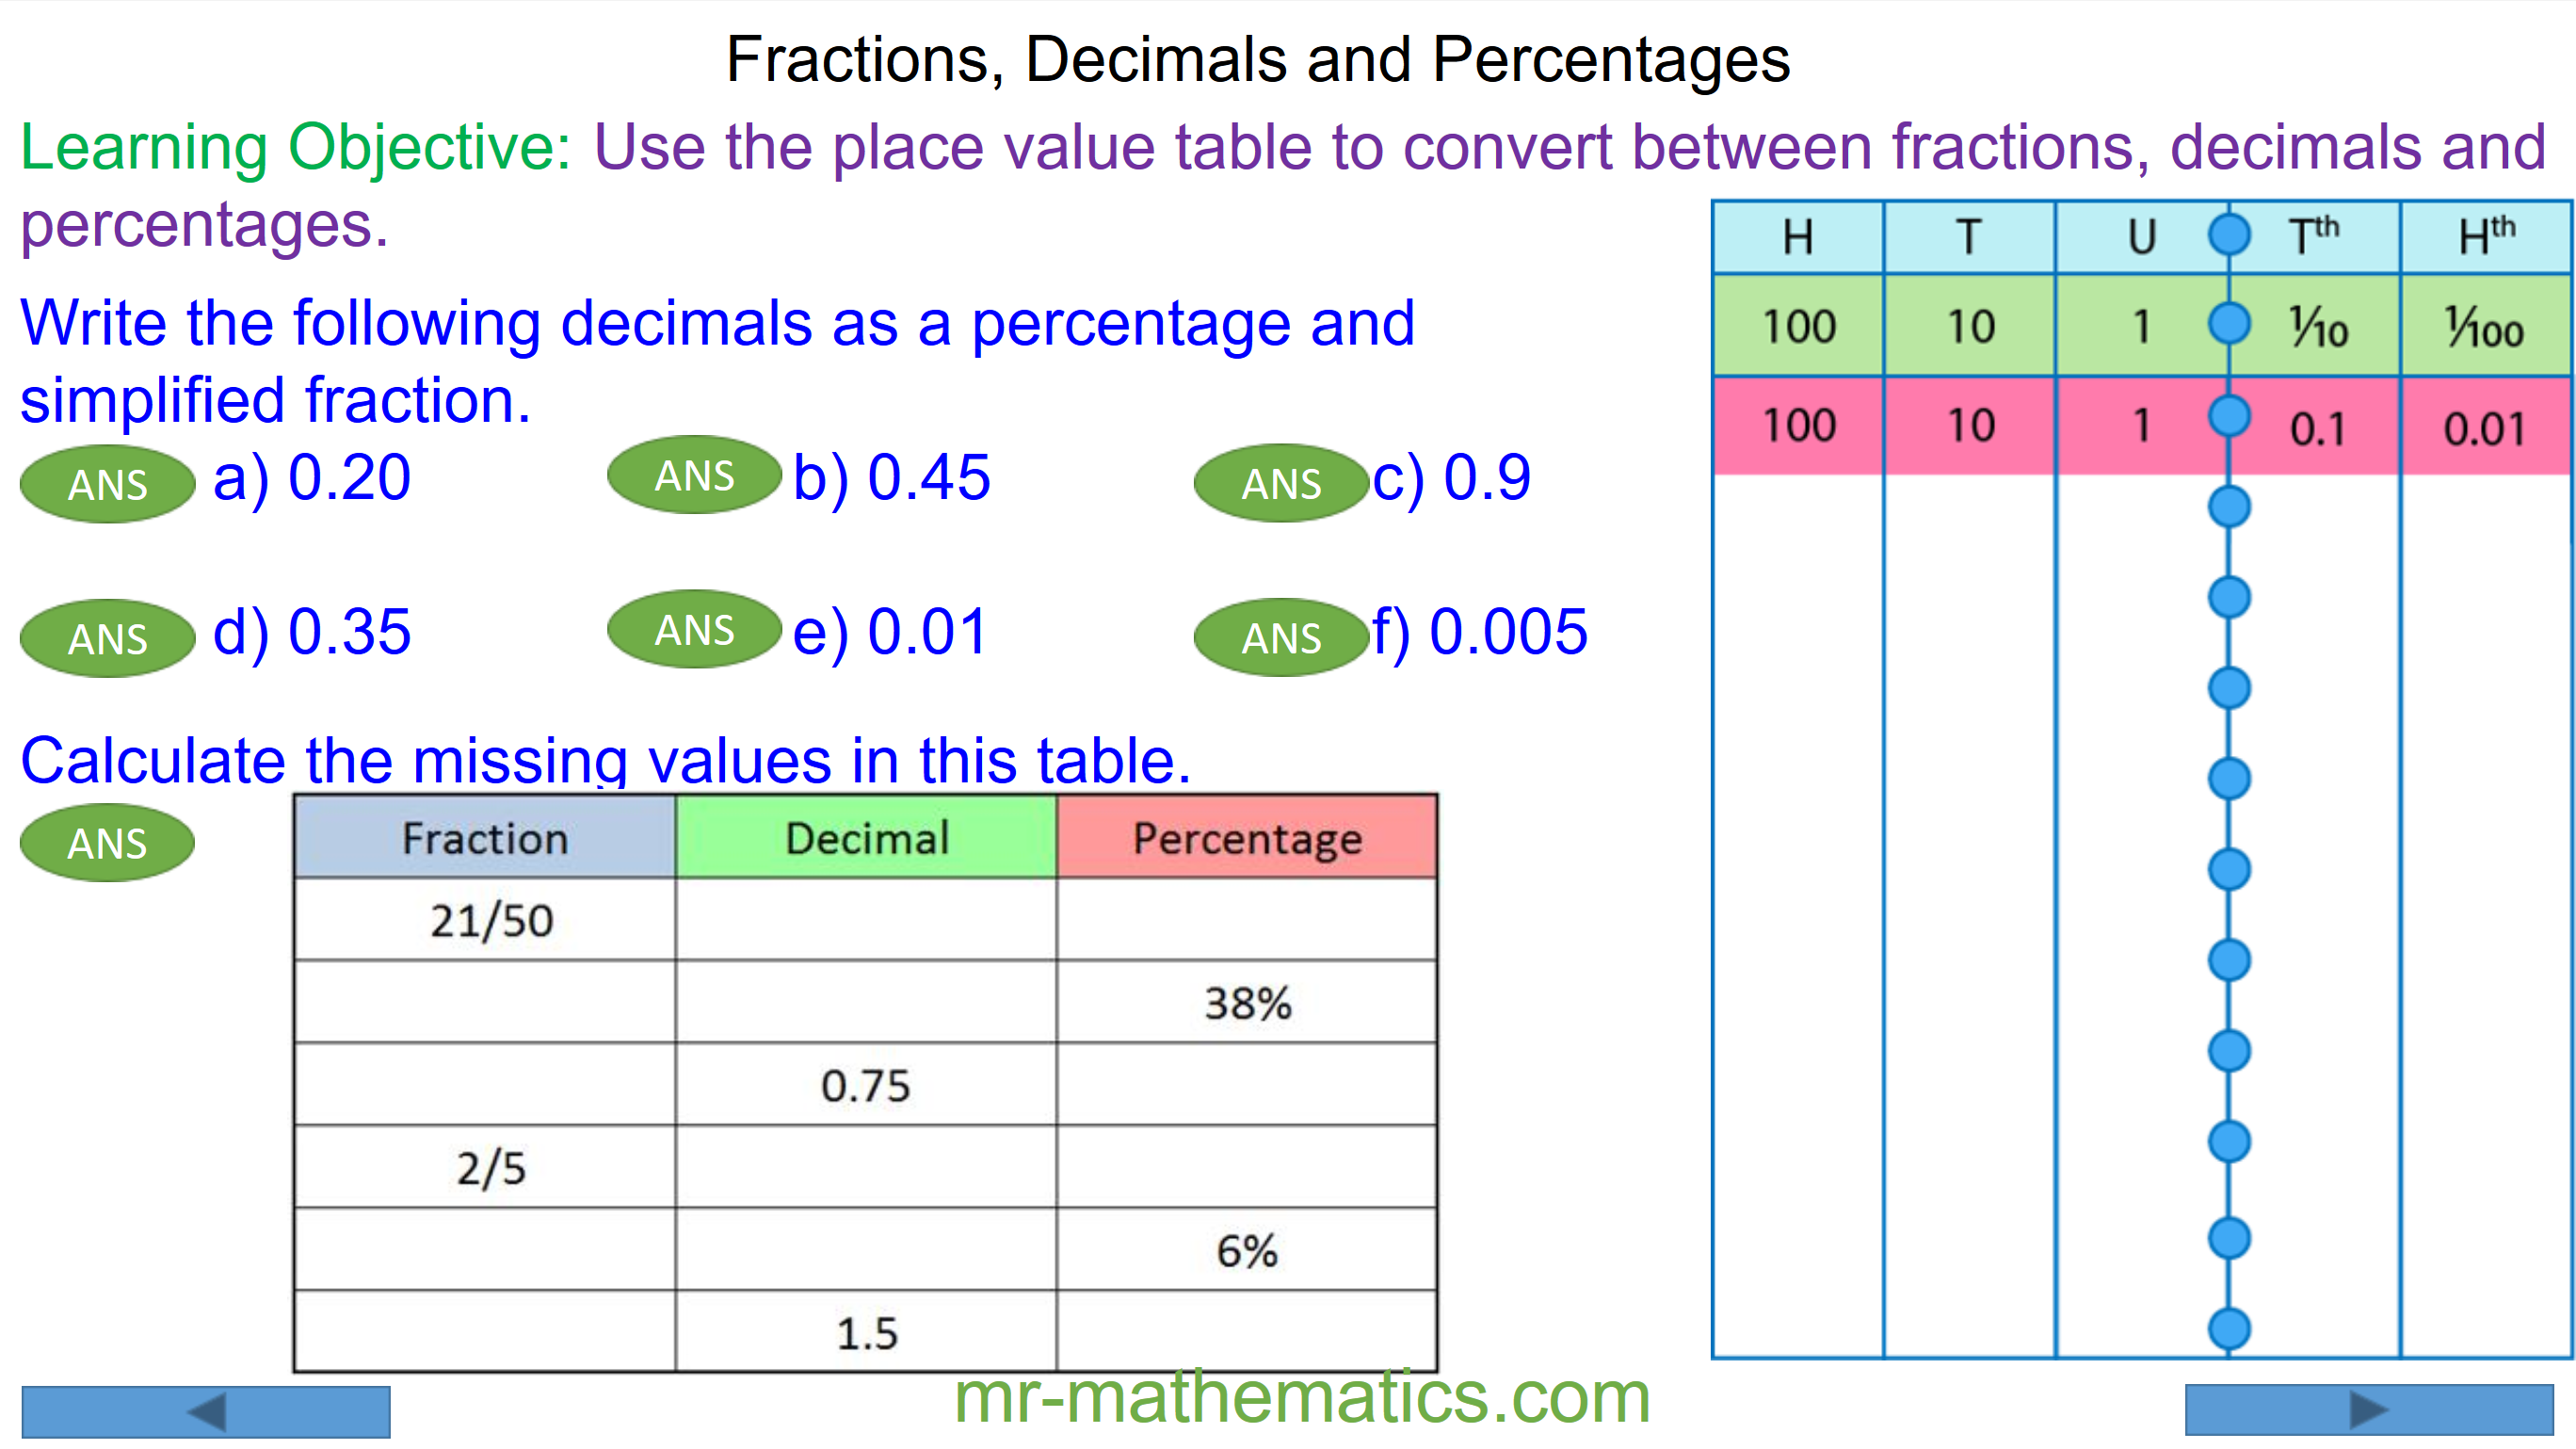 converting-between-fractions-decimals-and-percentages